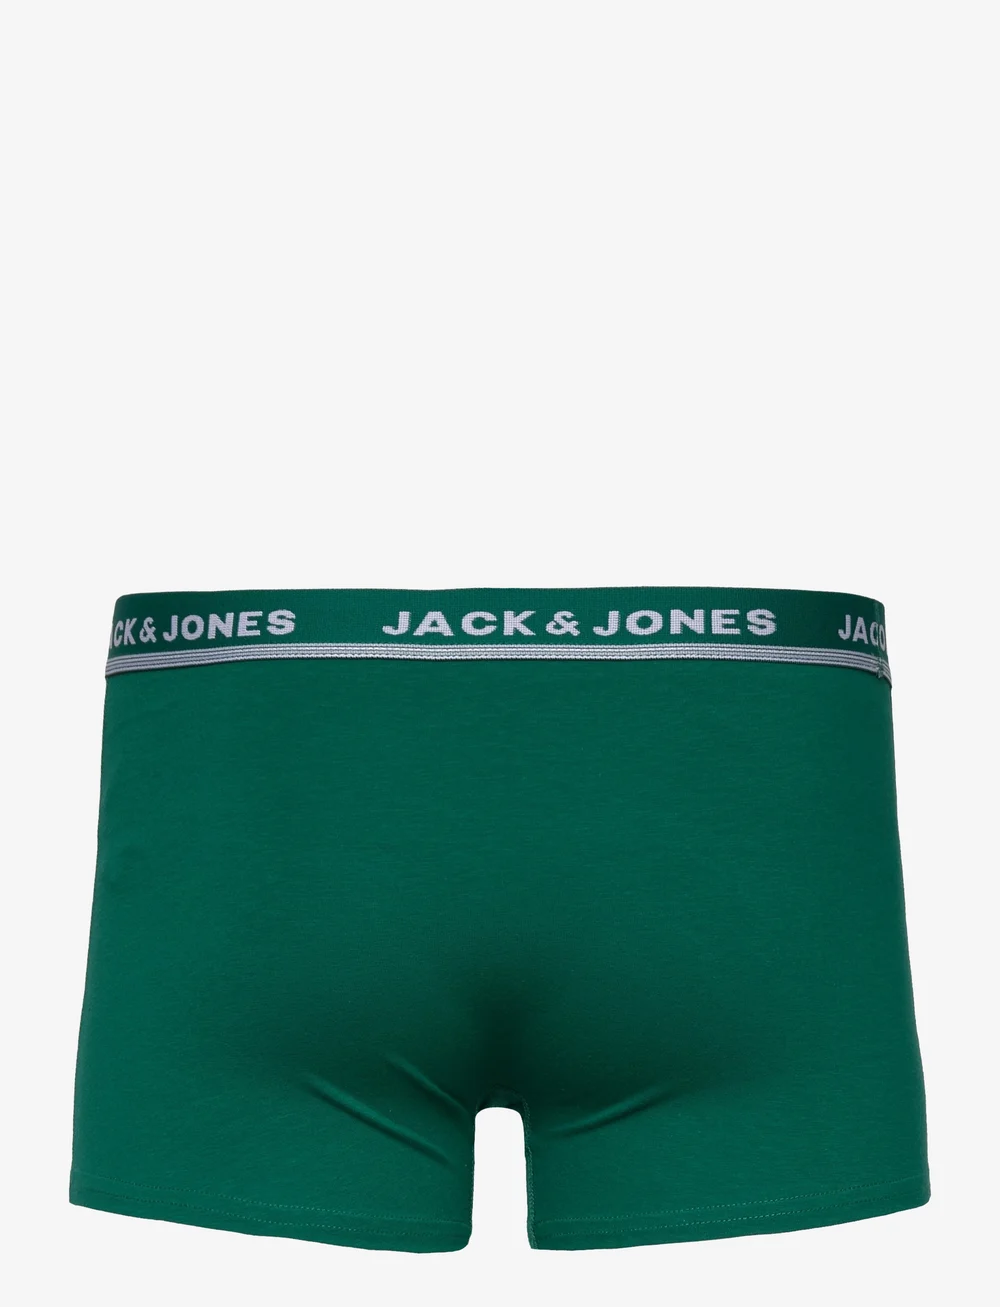 Jack & Jones Jaccolorful Kent Trunks 7 Pack - Boxers 